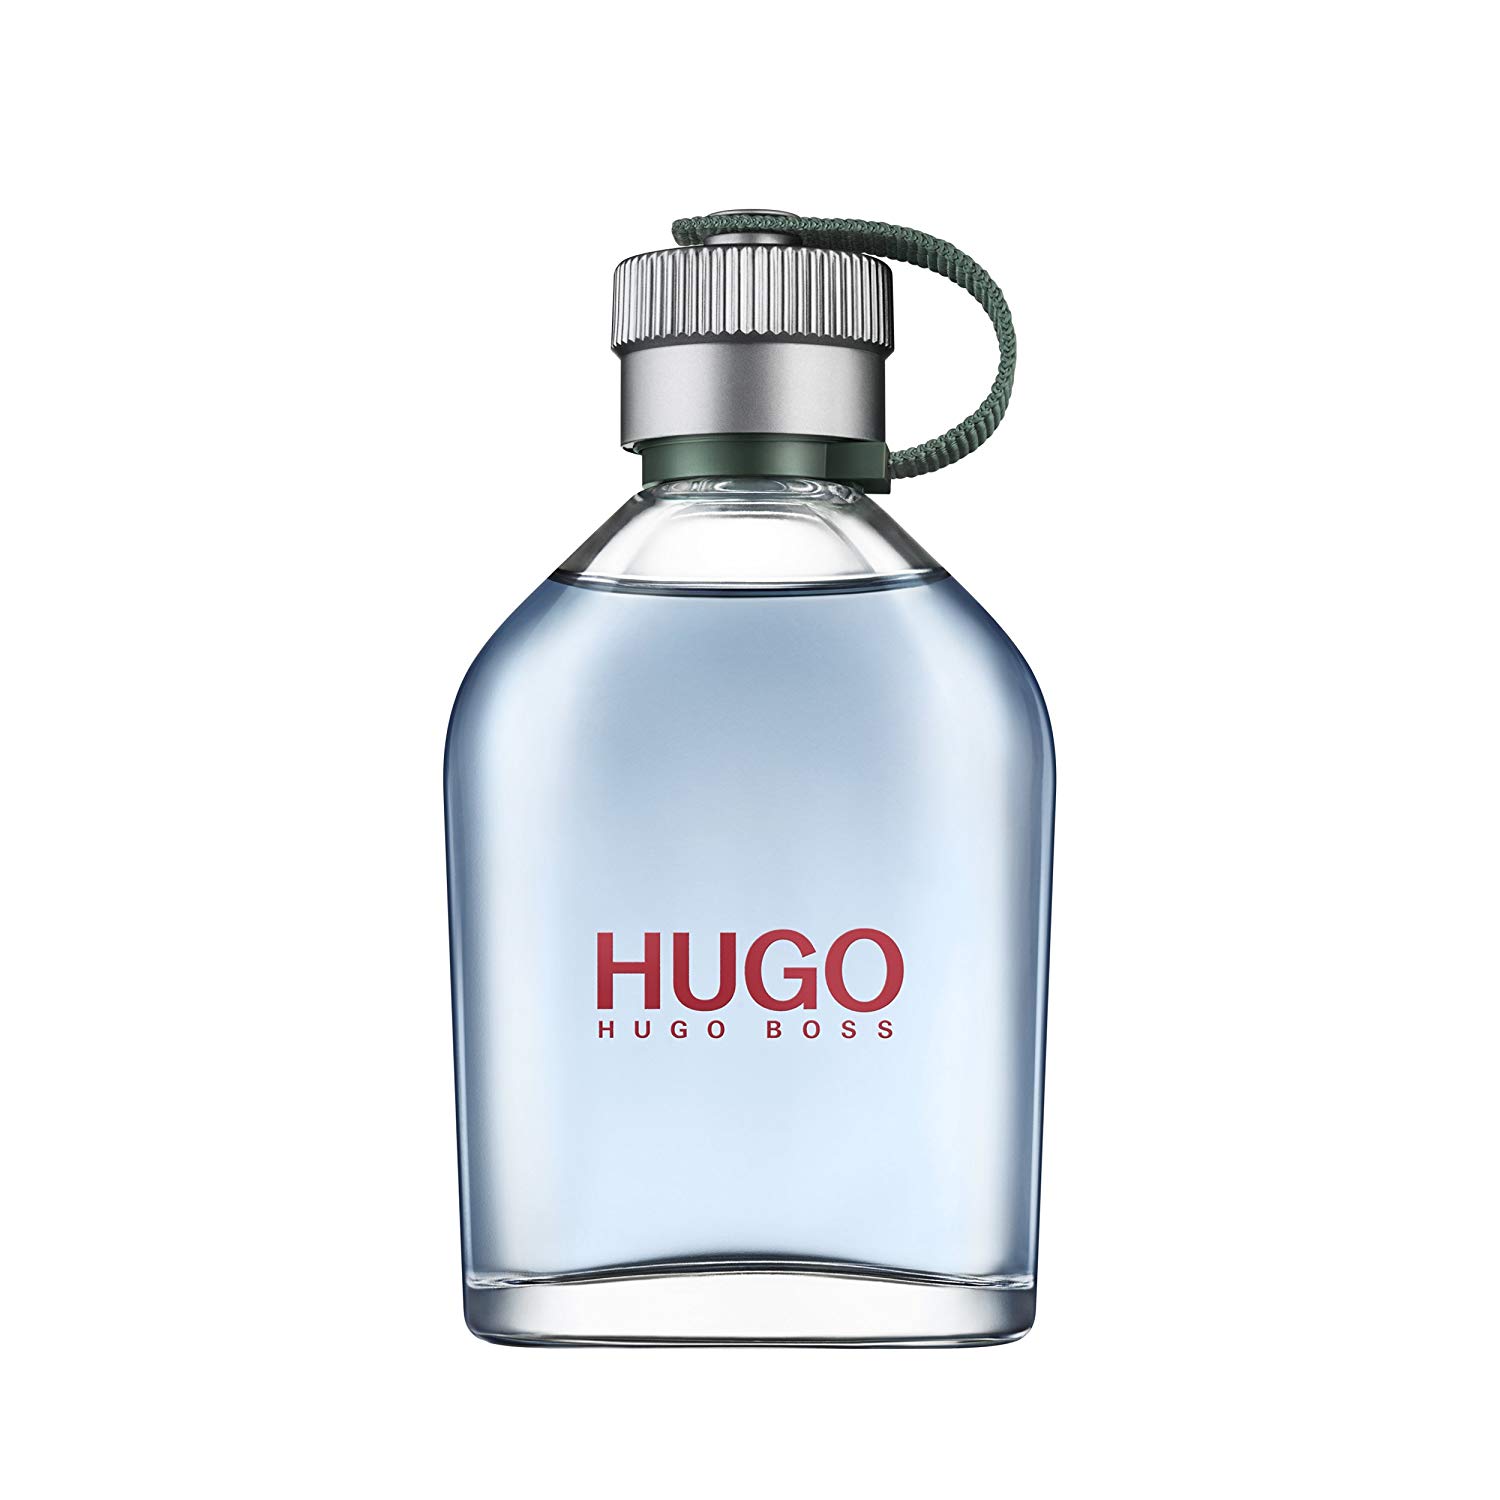 Hugo Boss Hugo Man 125ml solo 32€